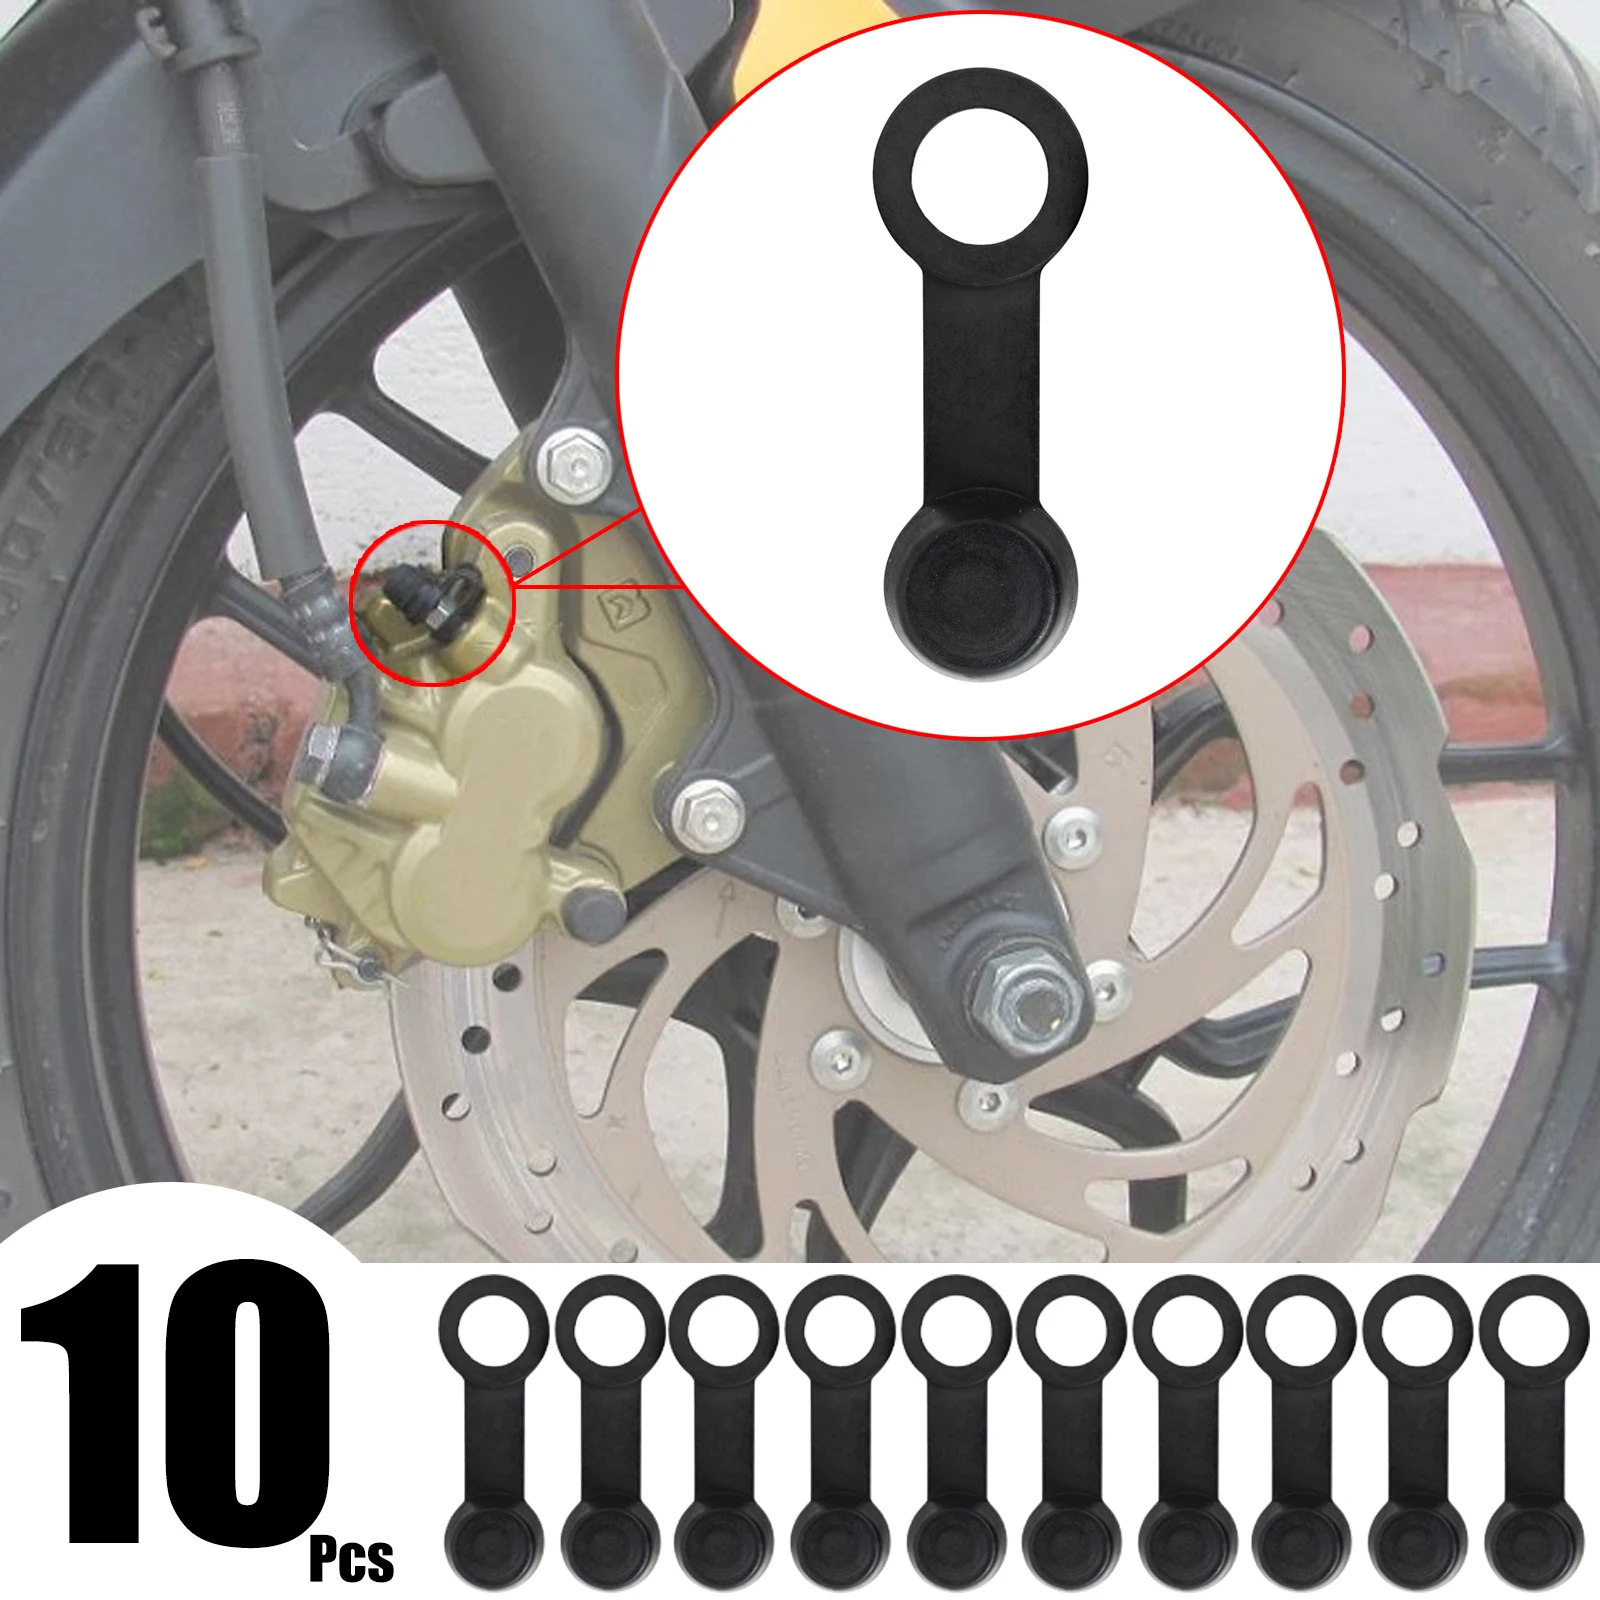 

10 X Universal Brake Caliper Dust Cap Bleed Nipple Screw Pump Bleeder Motorcycle Bike Car Accessories Motorbike Rubber 8mm Cars